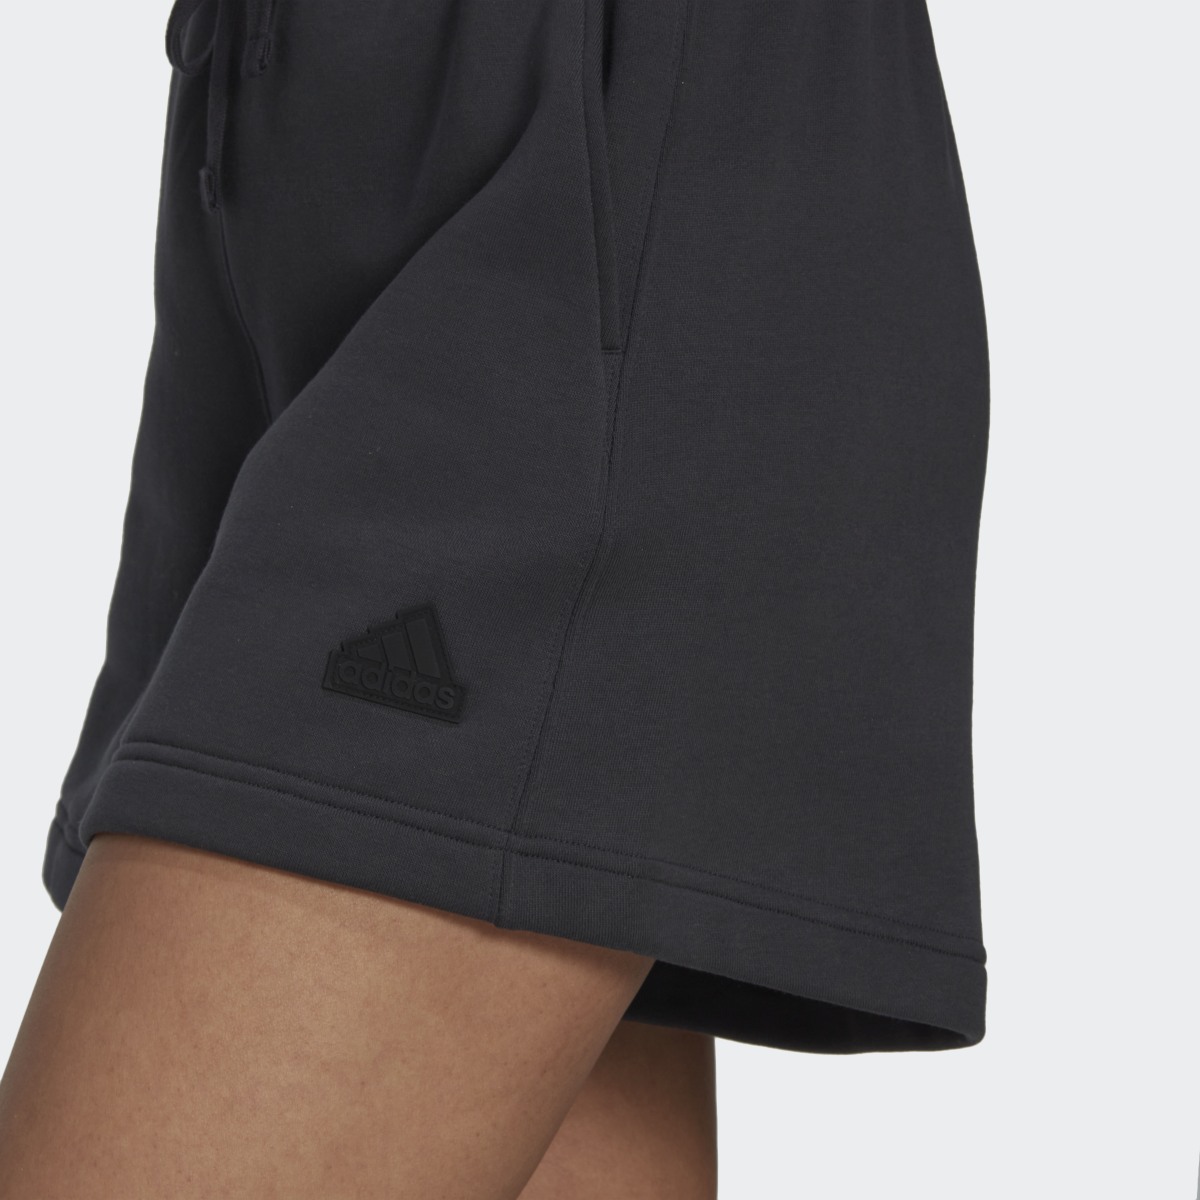 Adidas Sweat Shorts. 8